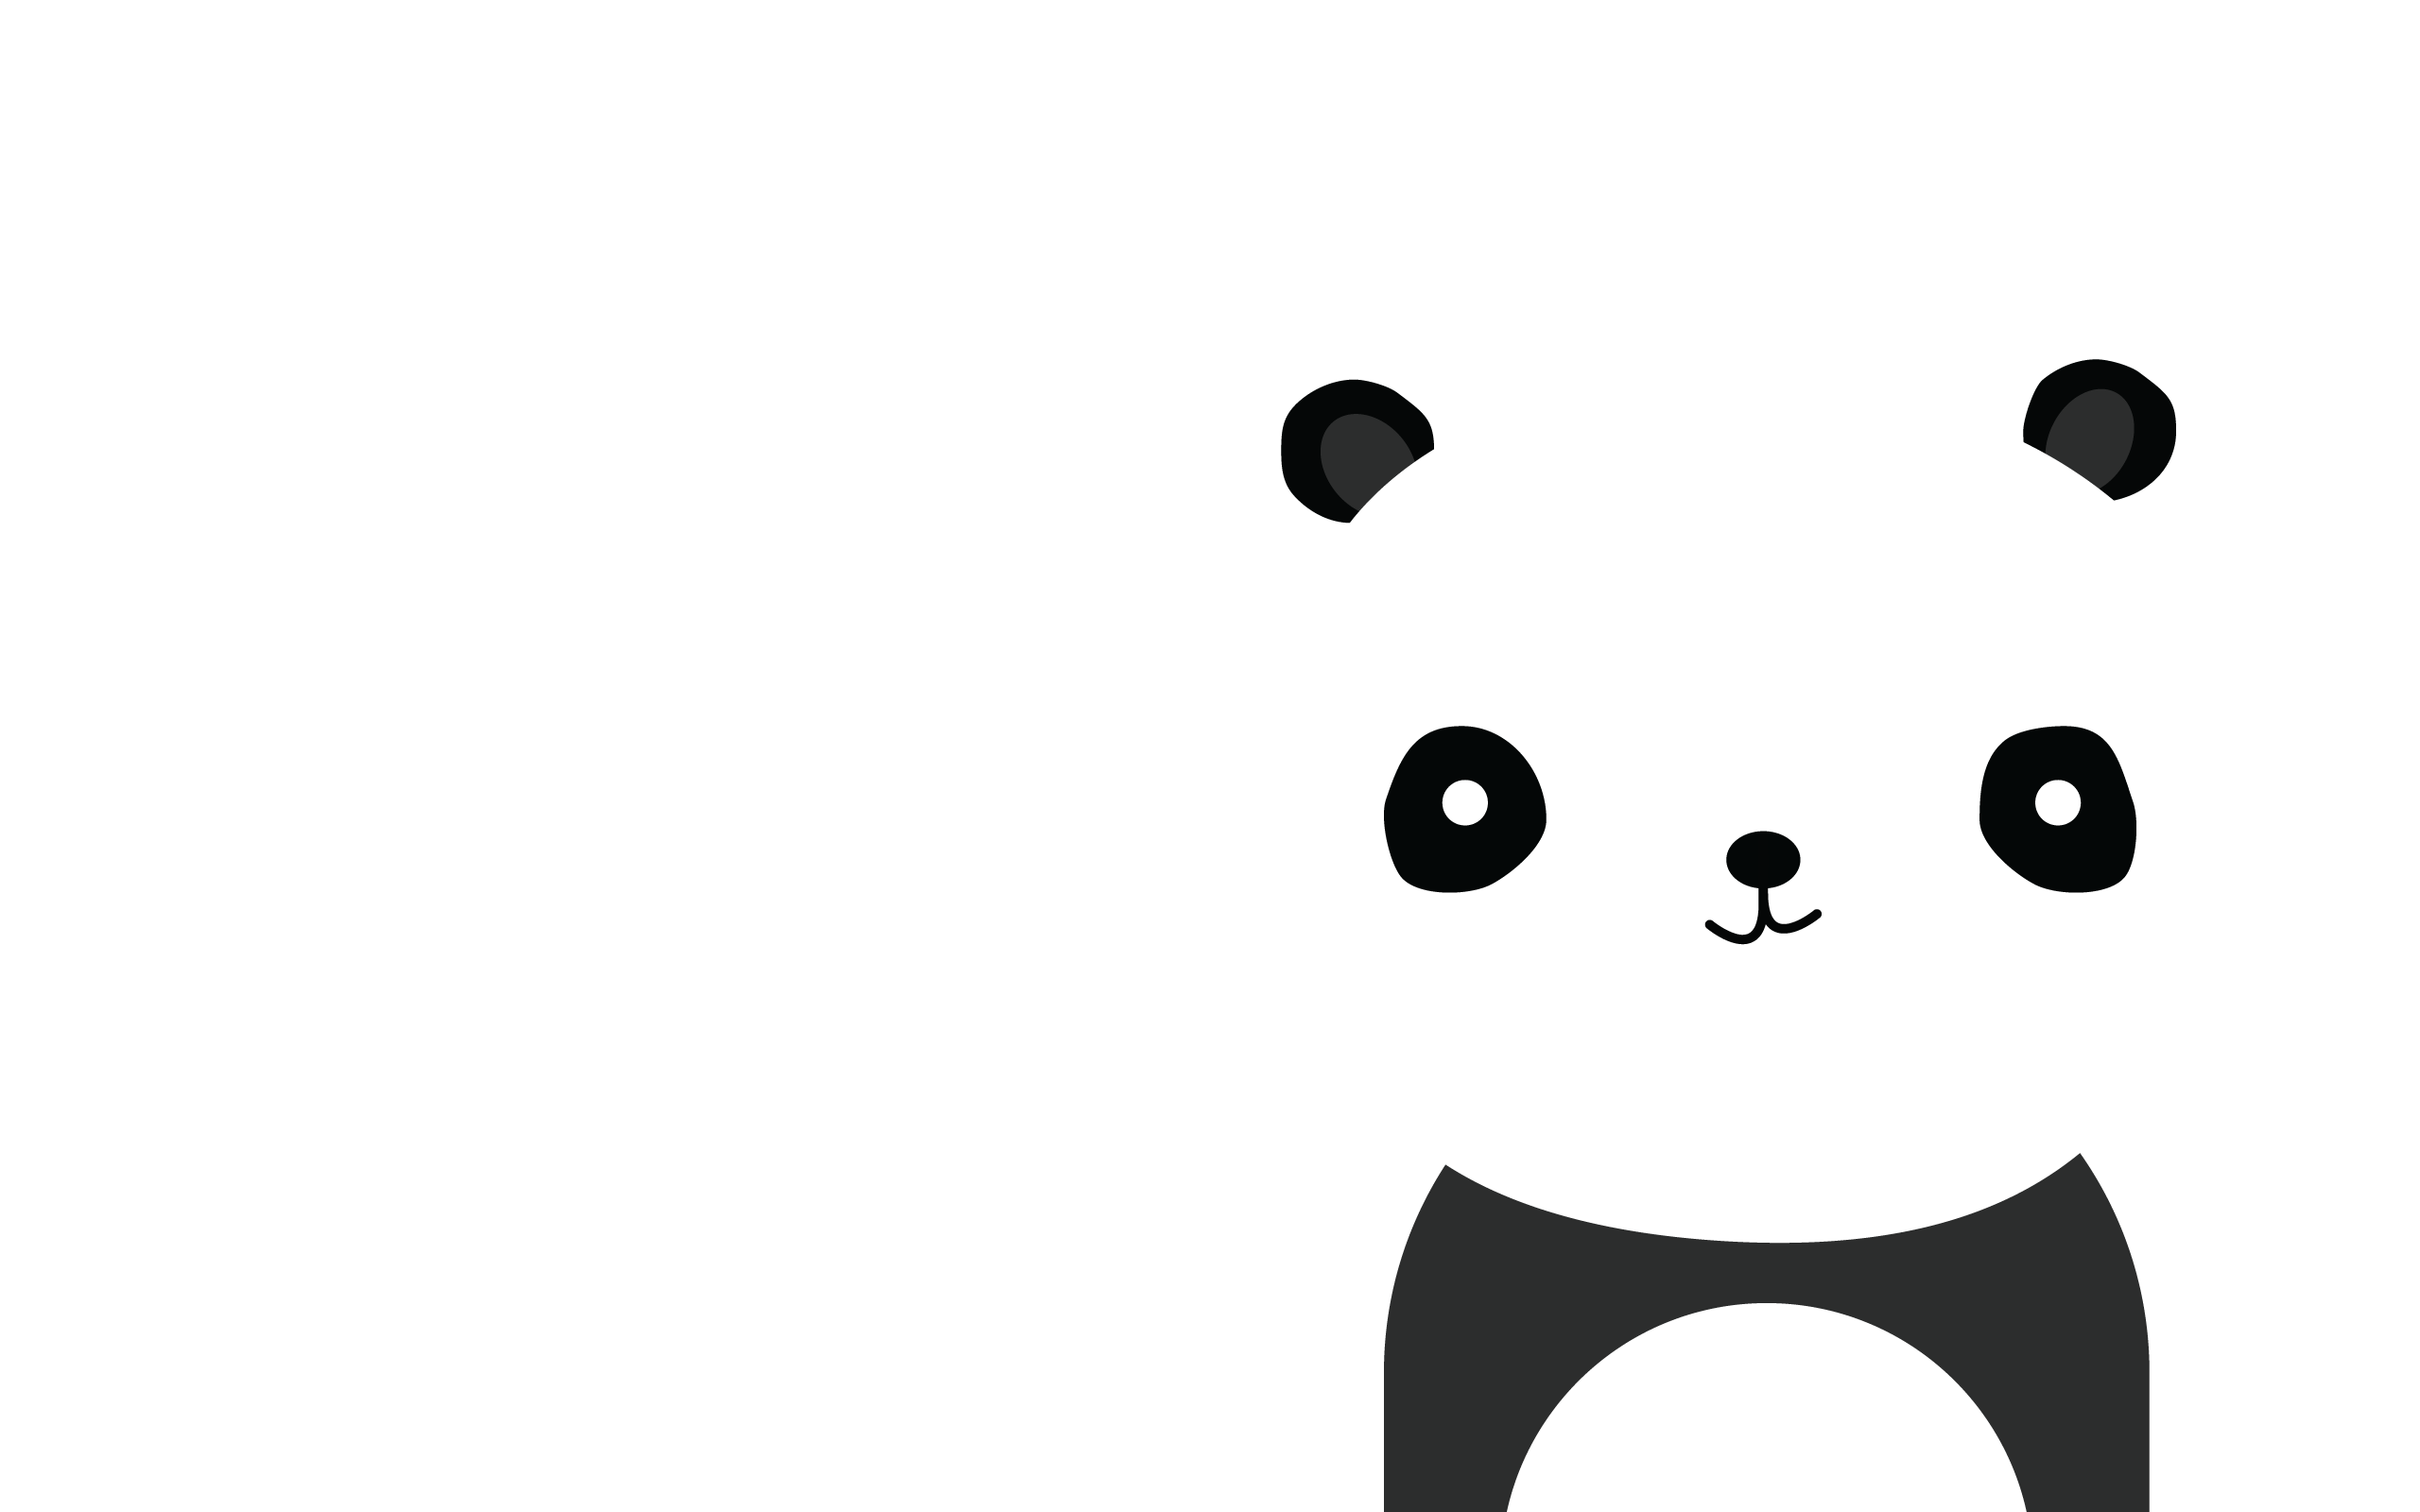 Panda Anime Desktop Background Wallpaper.png 2560×1600